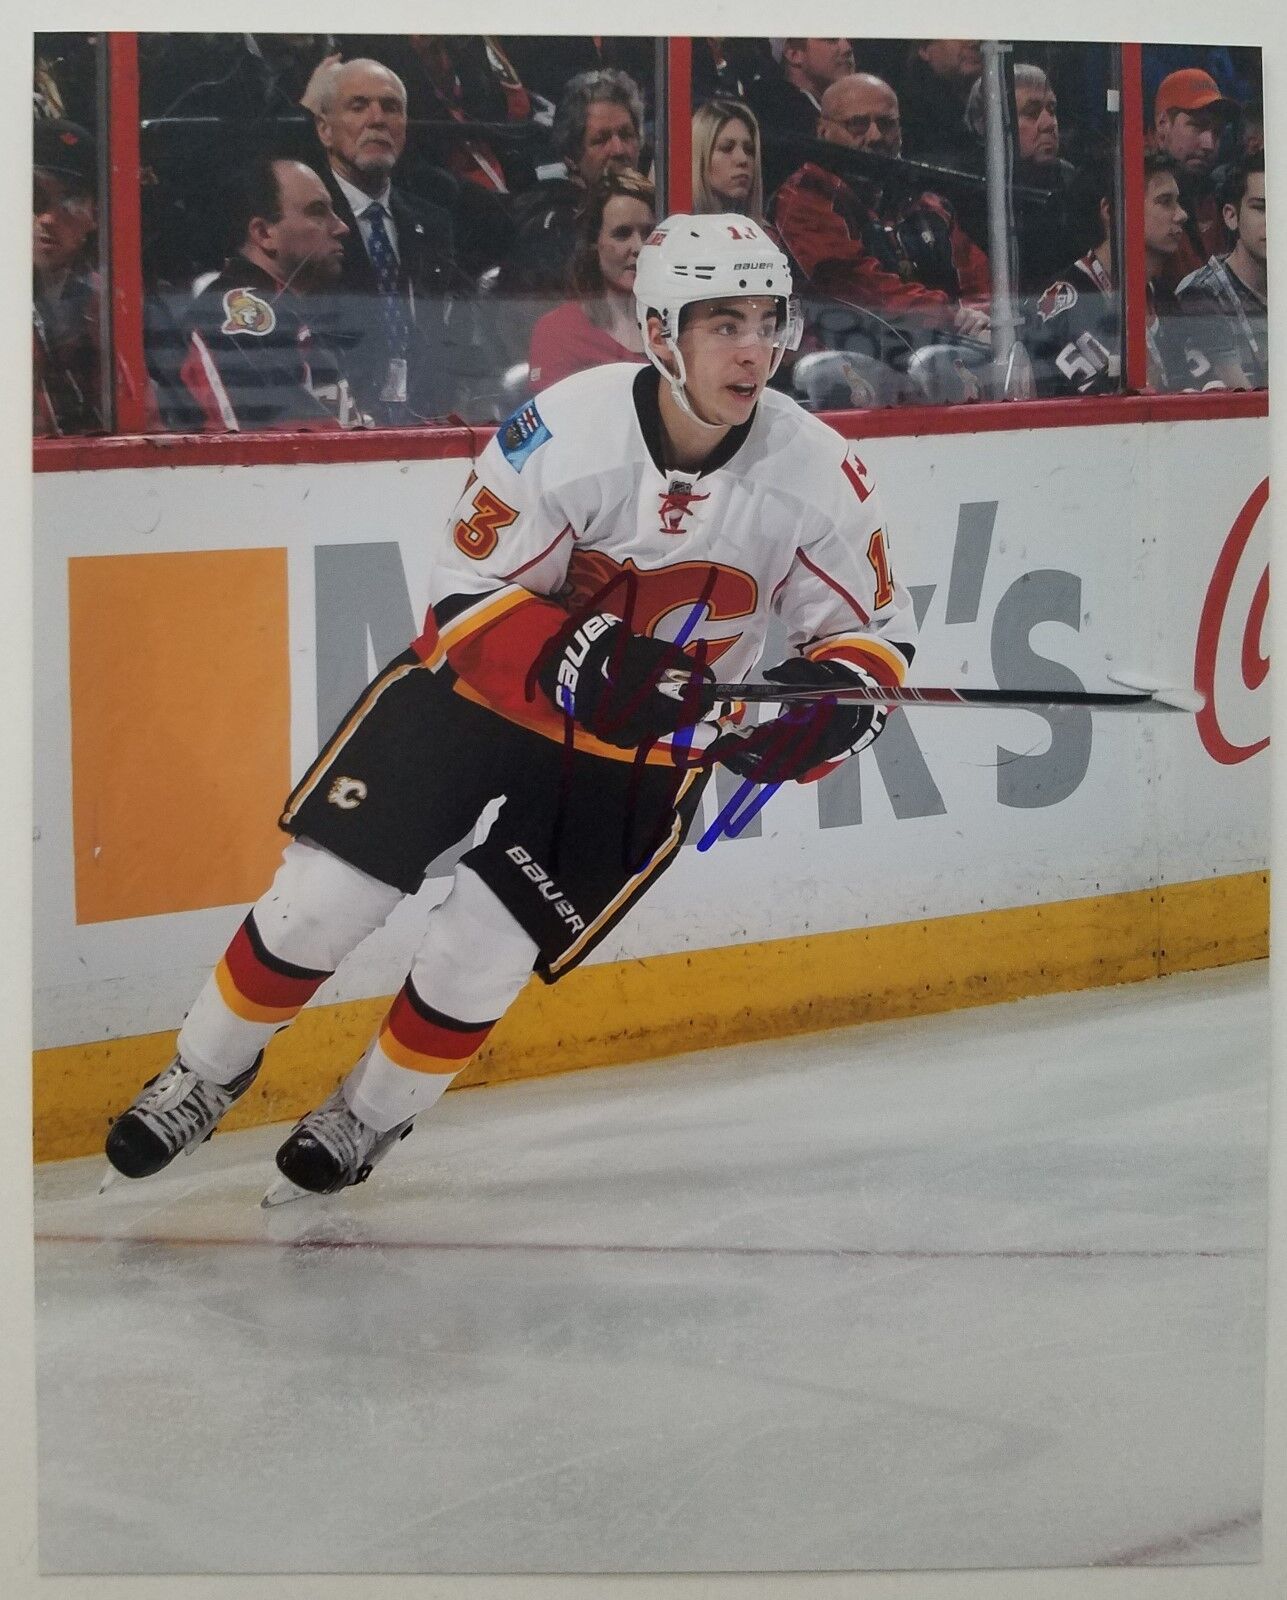 Johnny Gaudreau Signed 8x10 Photo Poster painting Calgary Flames Hockey NHL LEGEND RAD